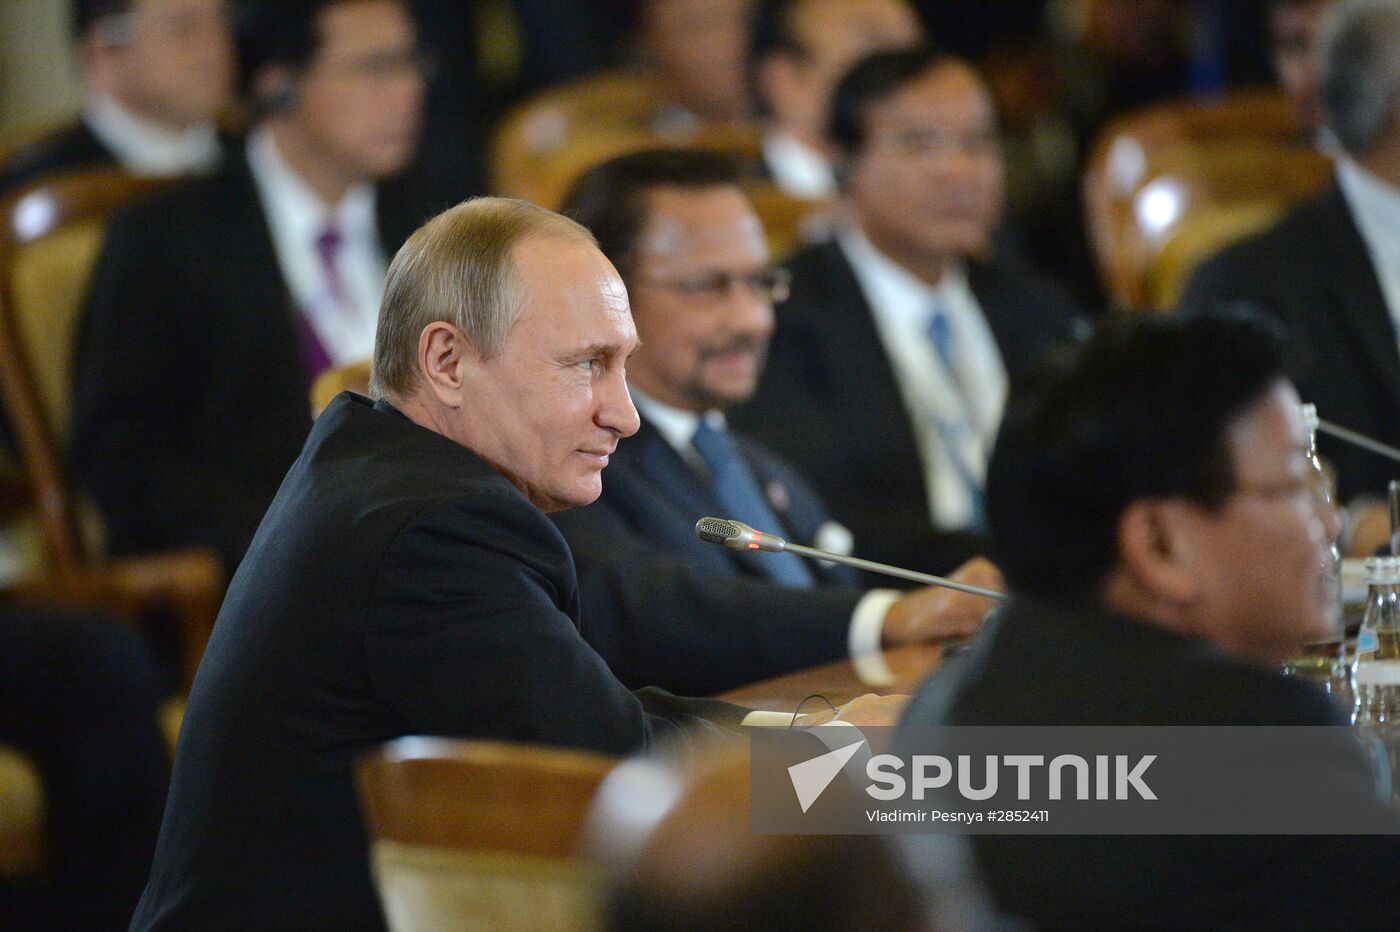 Plenary session of ASEAN-Russia Summit